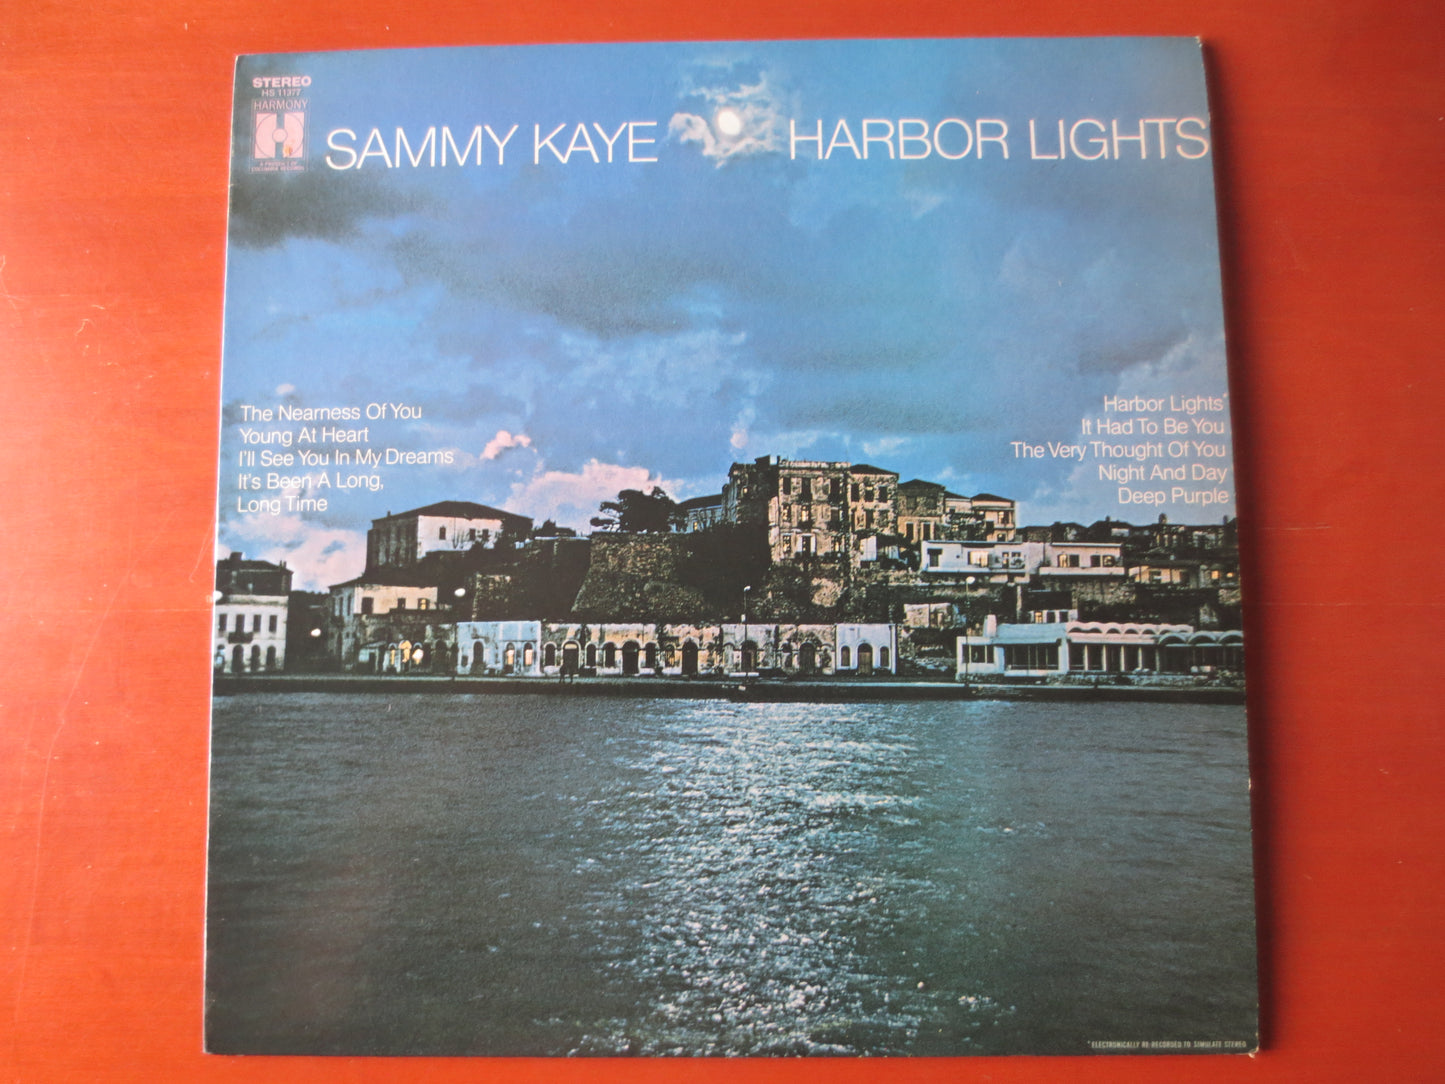 SAMMY KAYE, Harbor Lights, Sammy Kaye Records, Sammy Kaye Albums, Soundtrack Records, Records, Vinyl Albums, 1969 Records